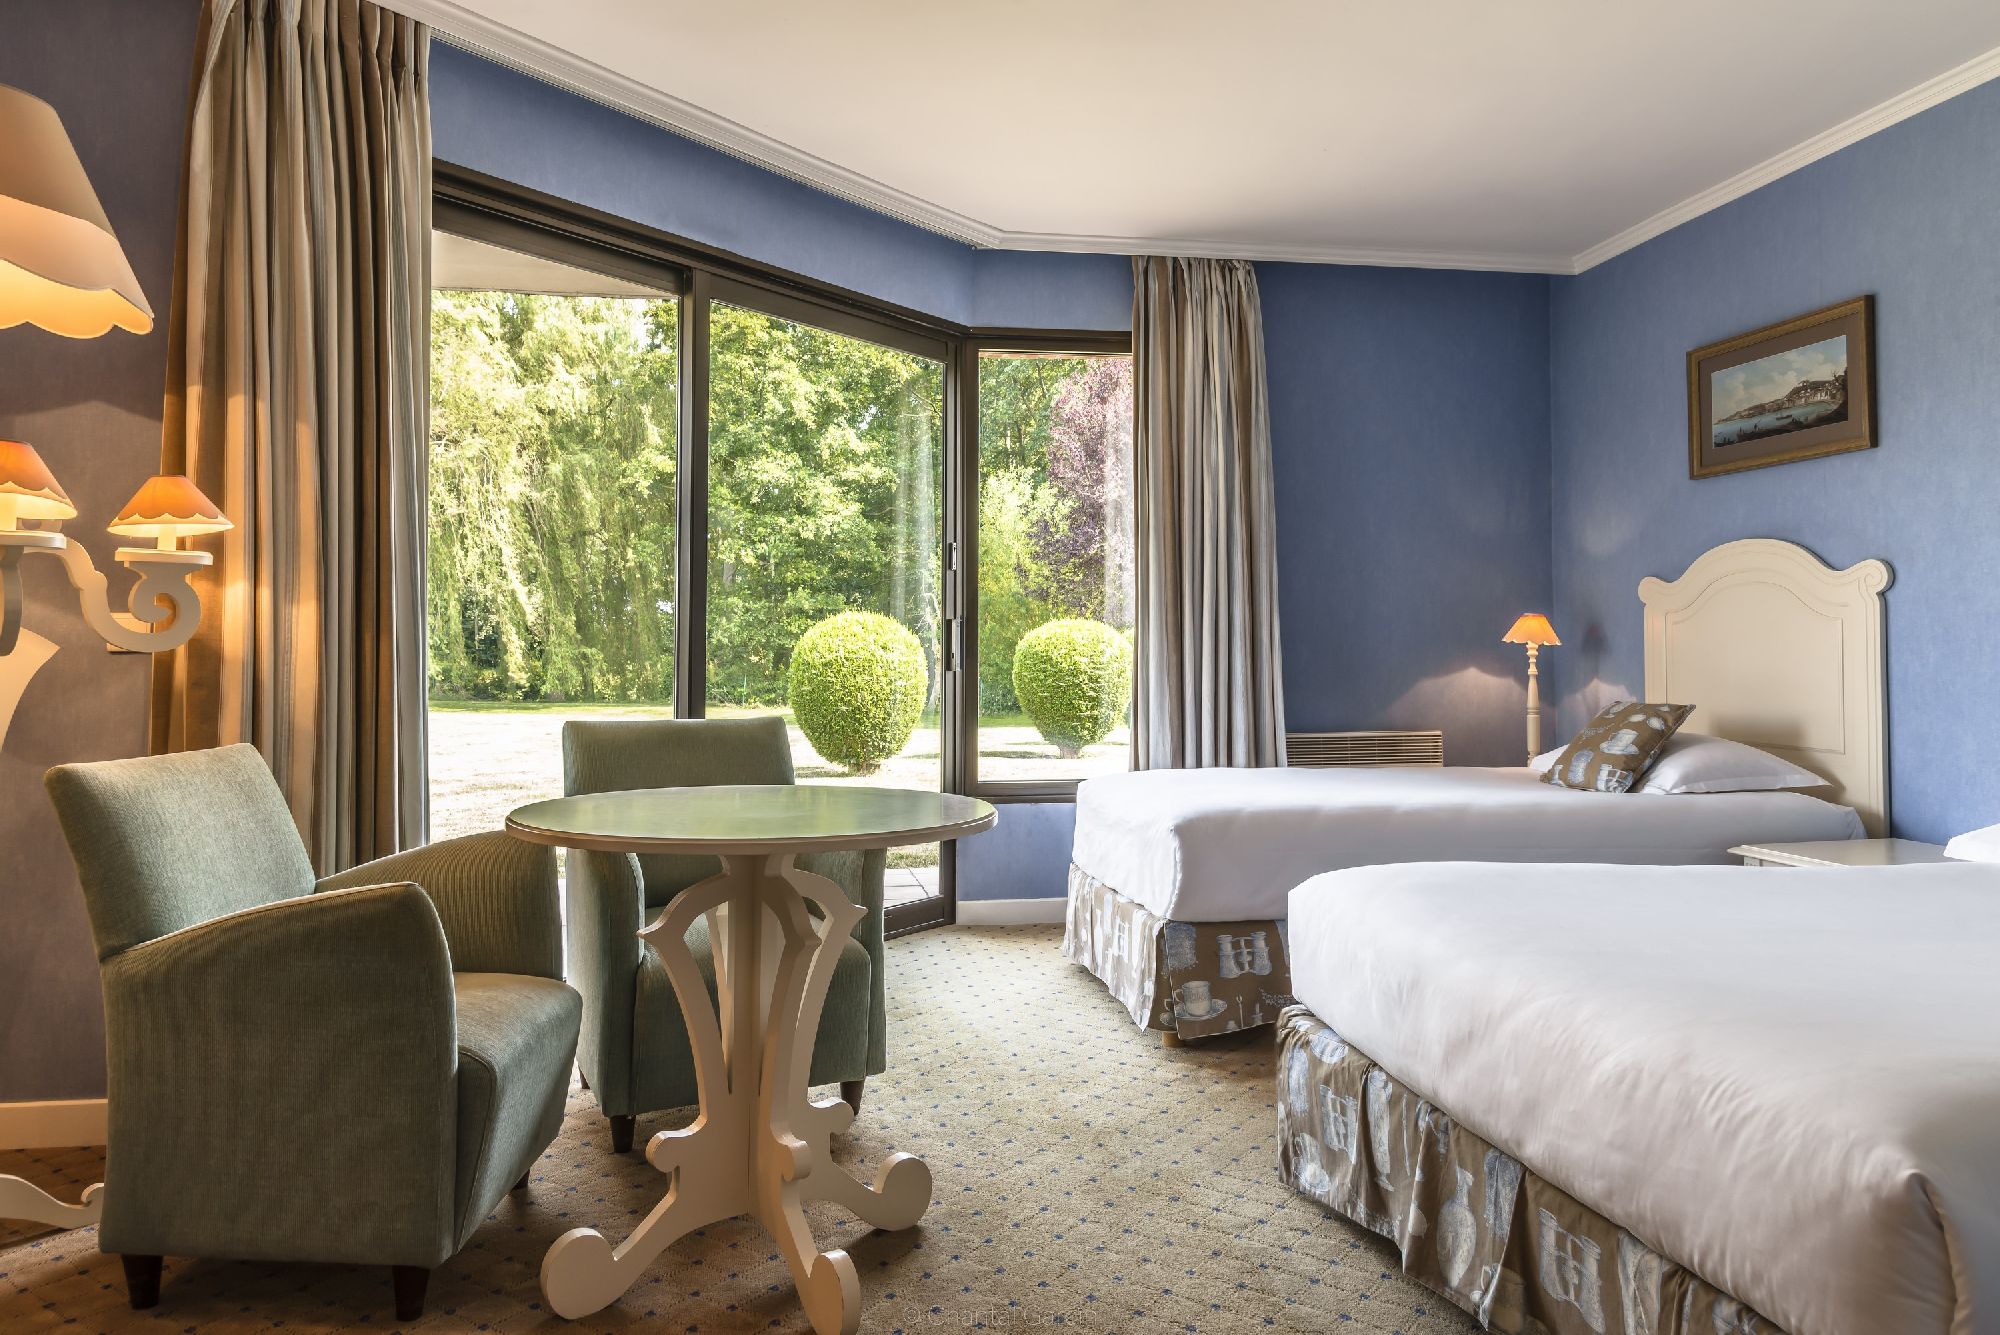 golf-expedition-golf-reizen-frankrijk-regio-pas-de-calais-chateau-tilques-luxe-slaapkamer-drie-personen-bureau-tafel-stoelen.jpg